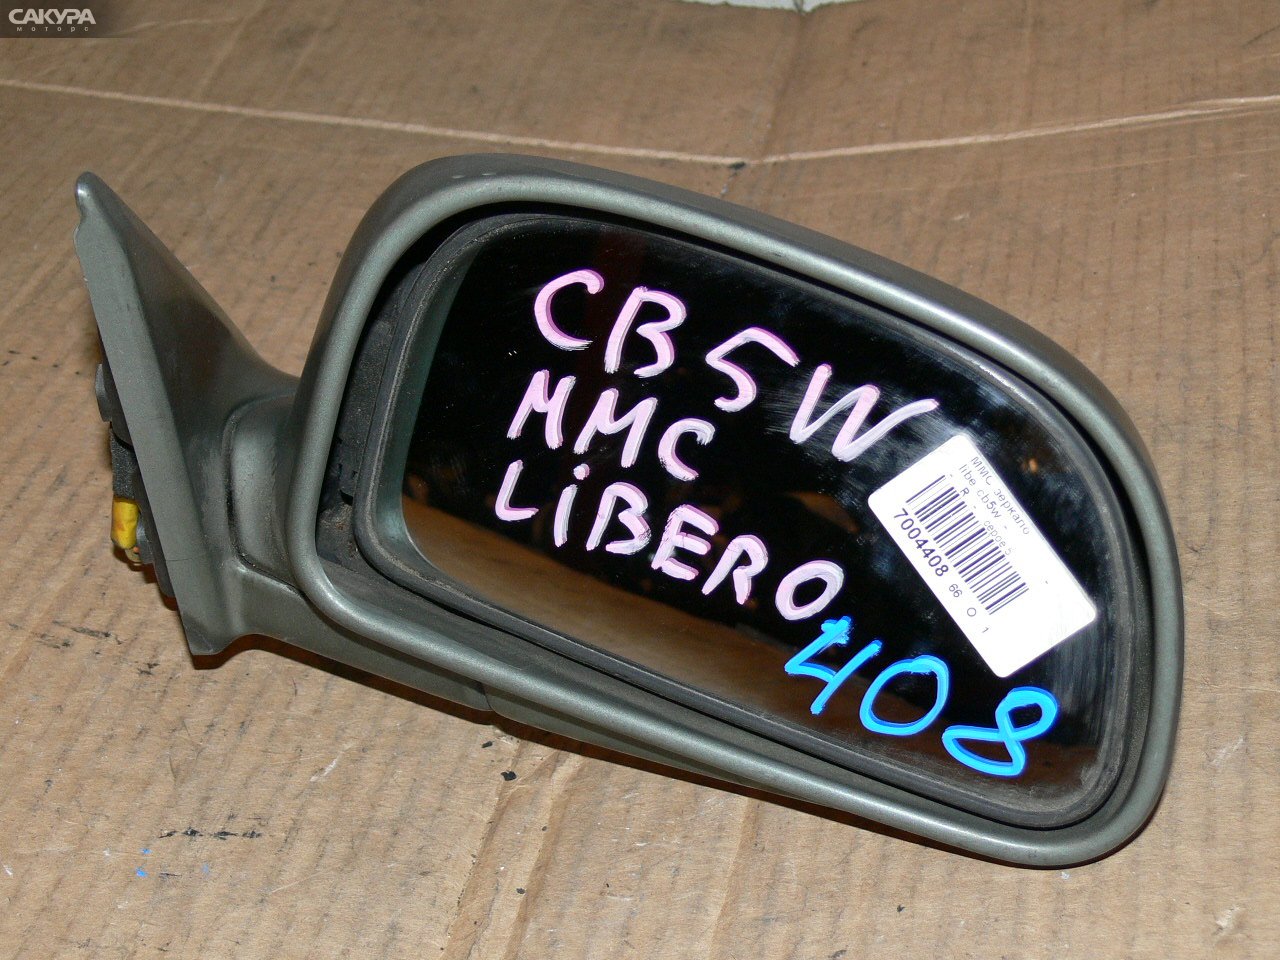 Зеркало боковое правое Mitsubishi Libero CB5W: купить в Сакура Иркутск.